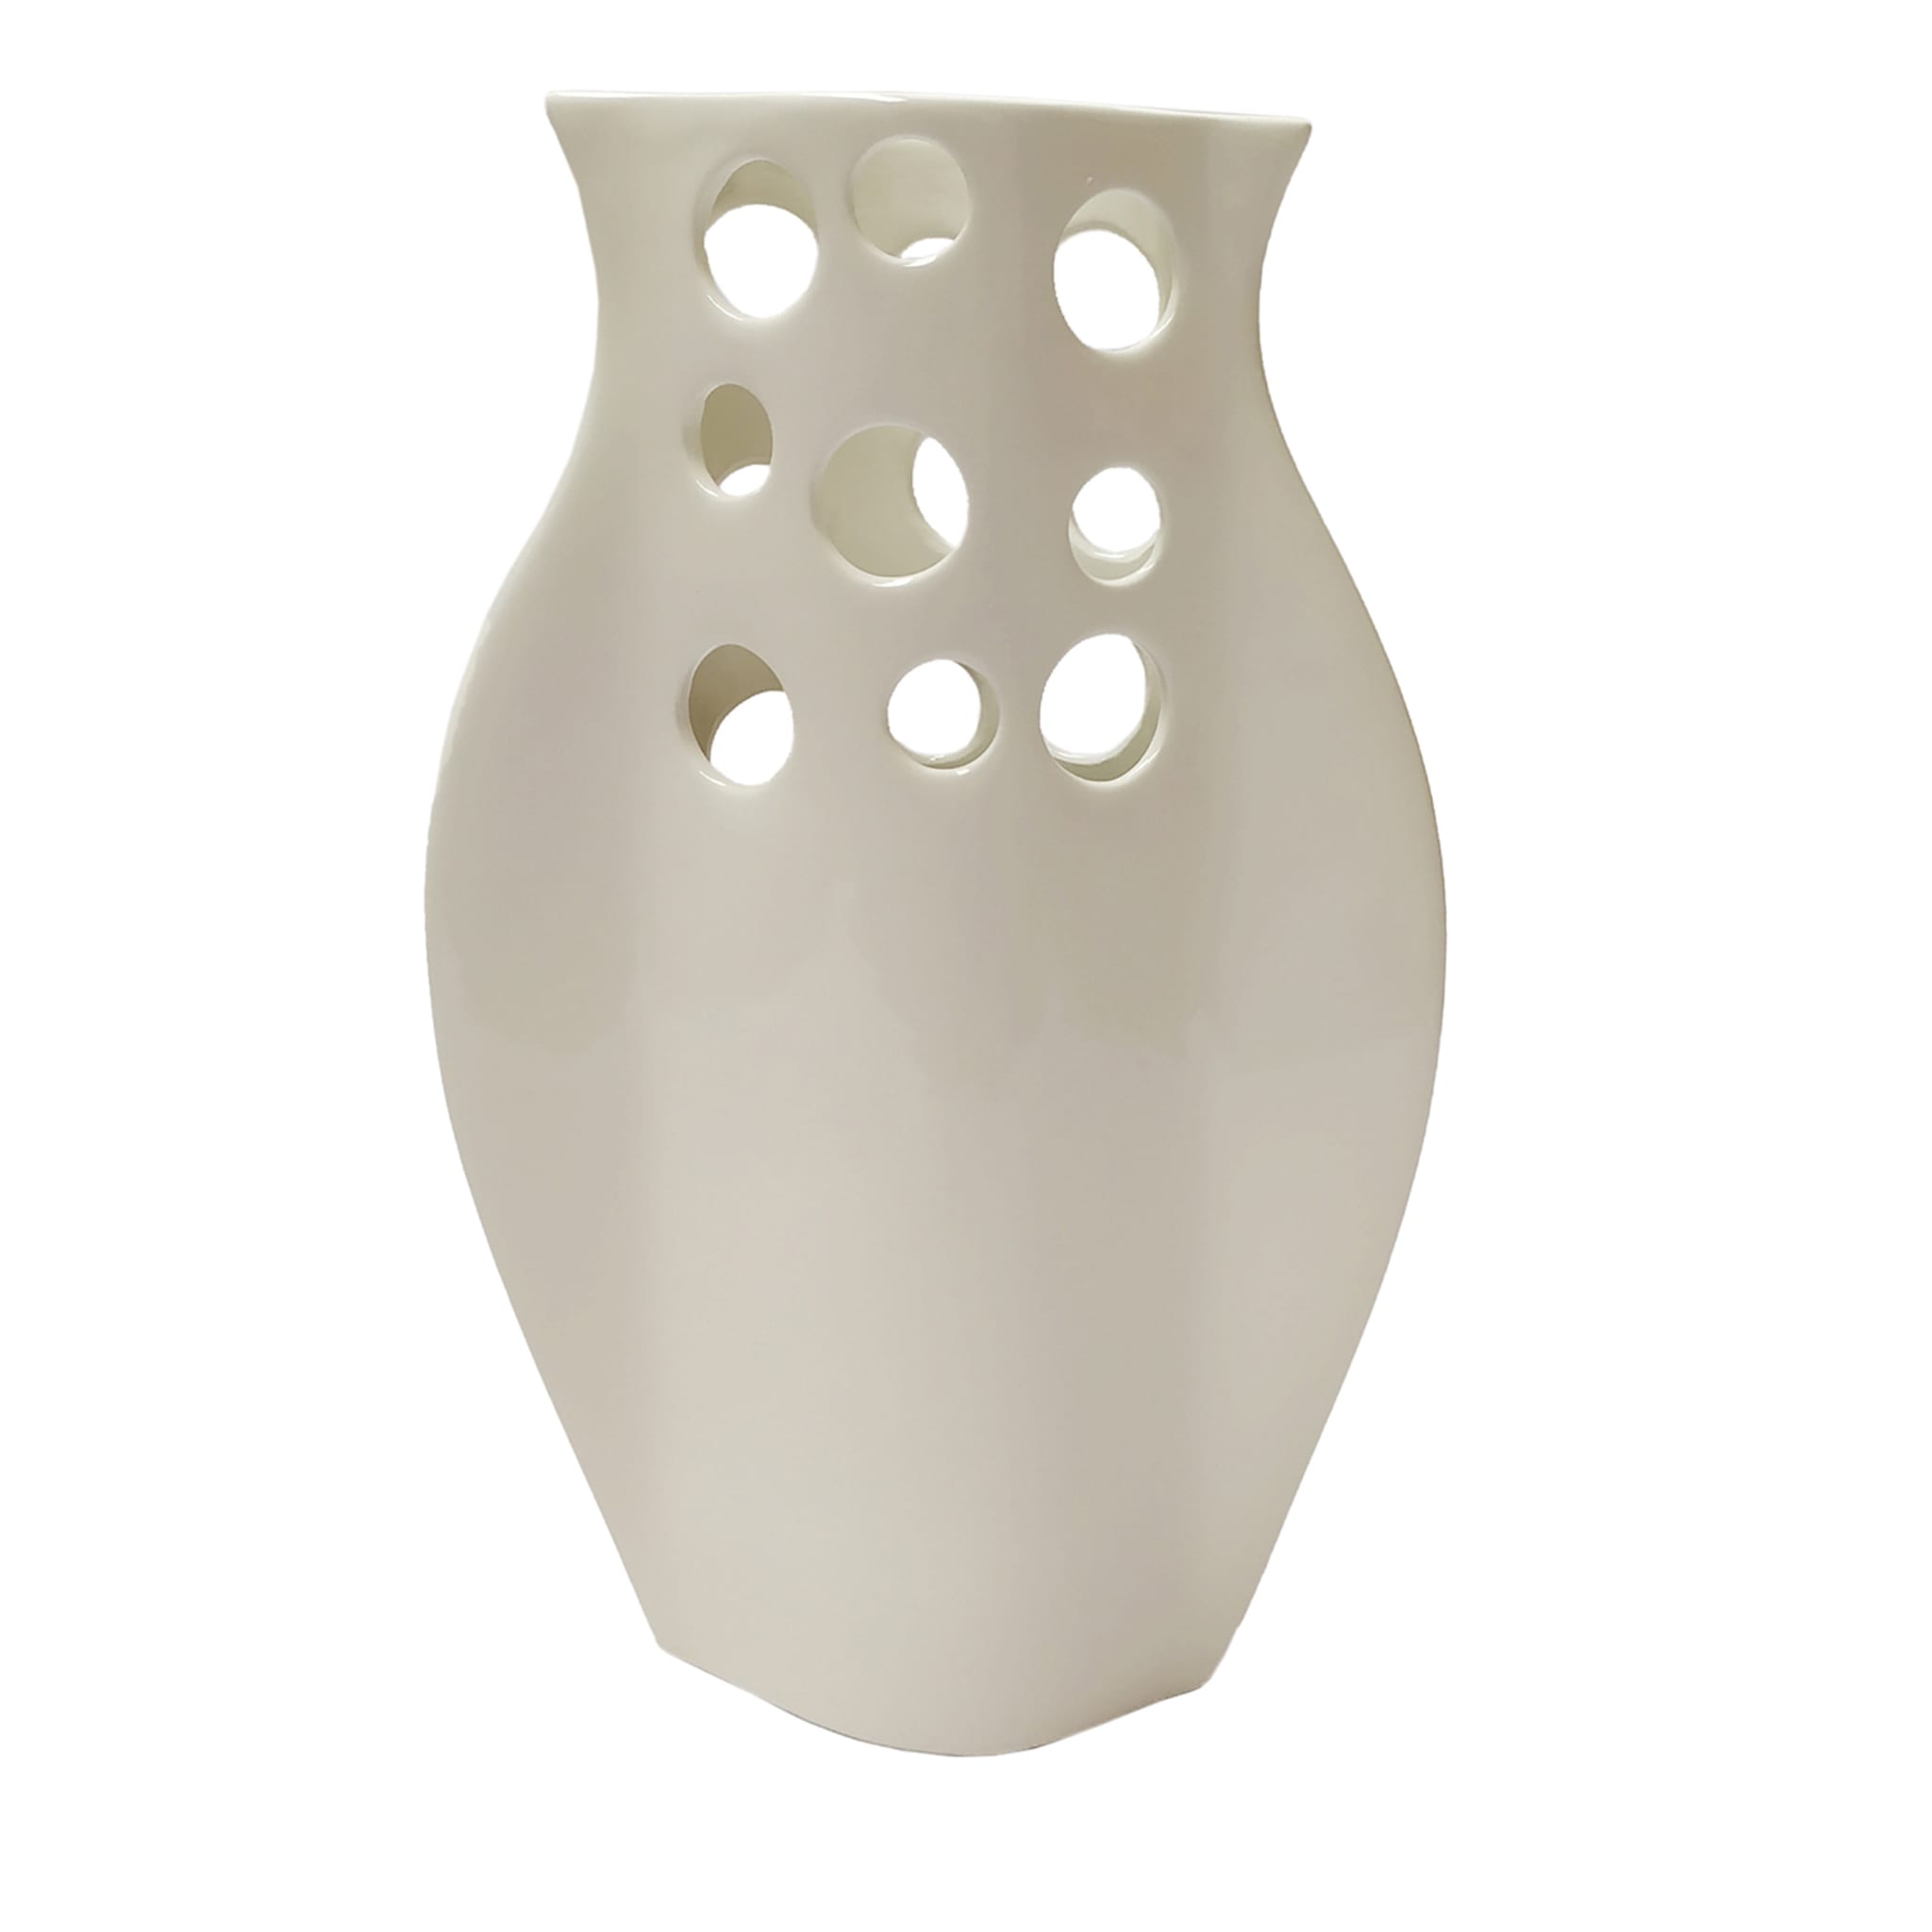 Schiacciati Glossy White Vase #2 - Main view